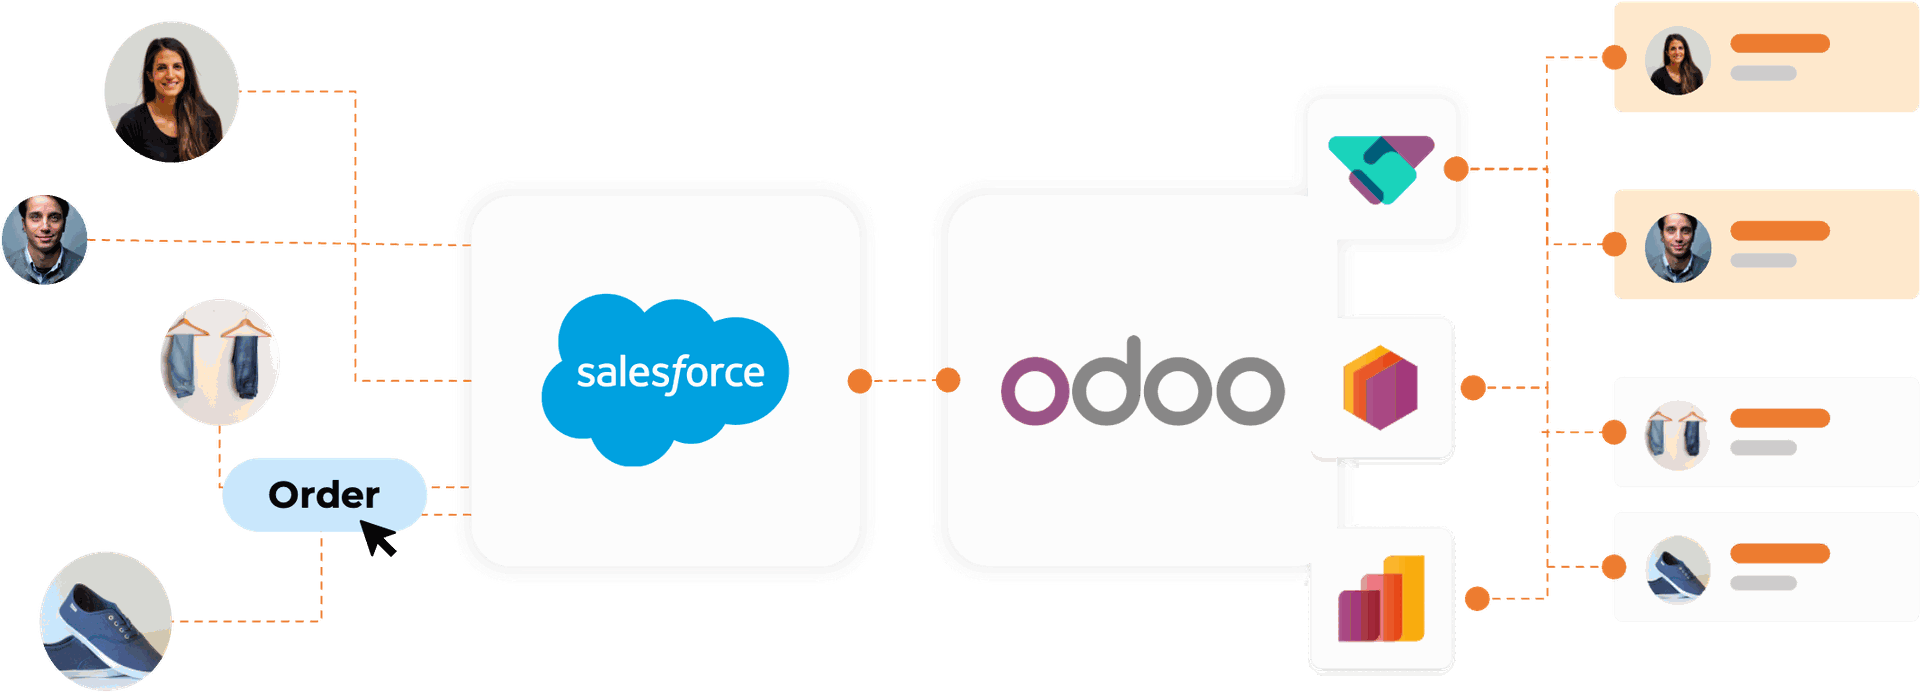 Integrasi Odoo Salesforce